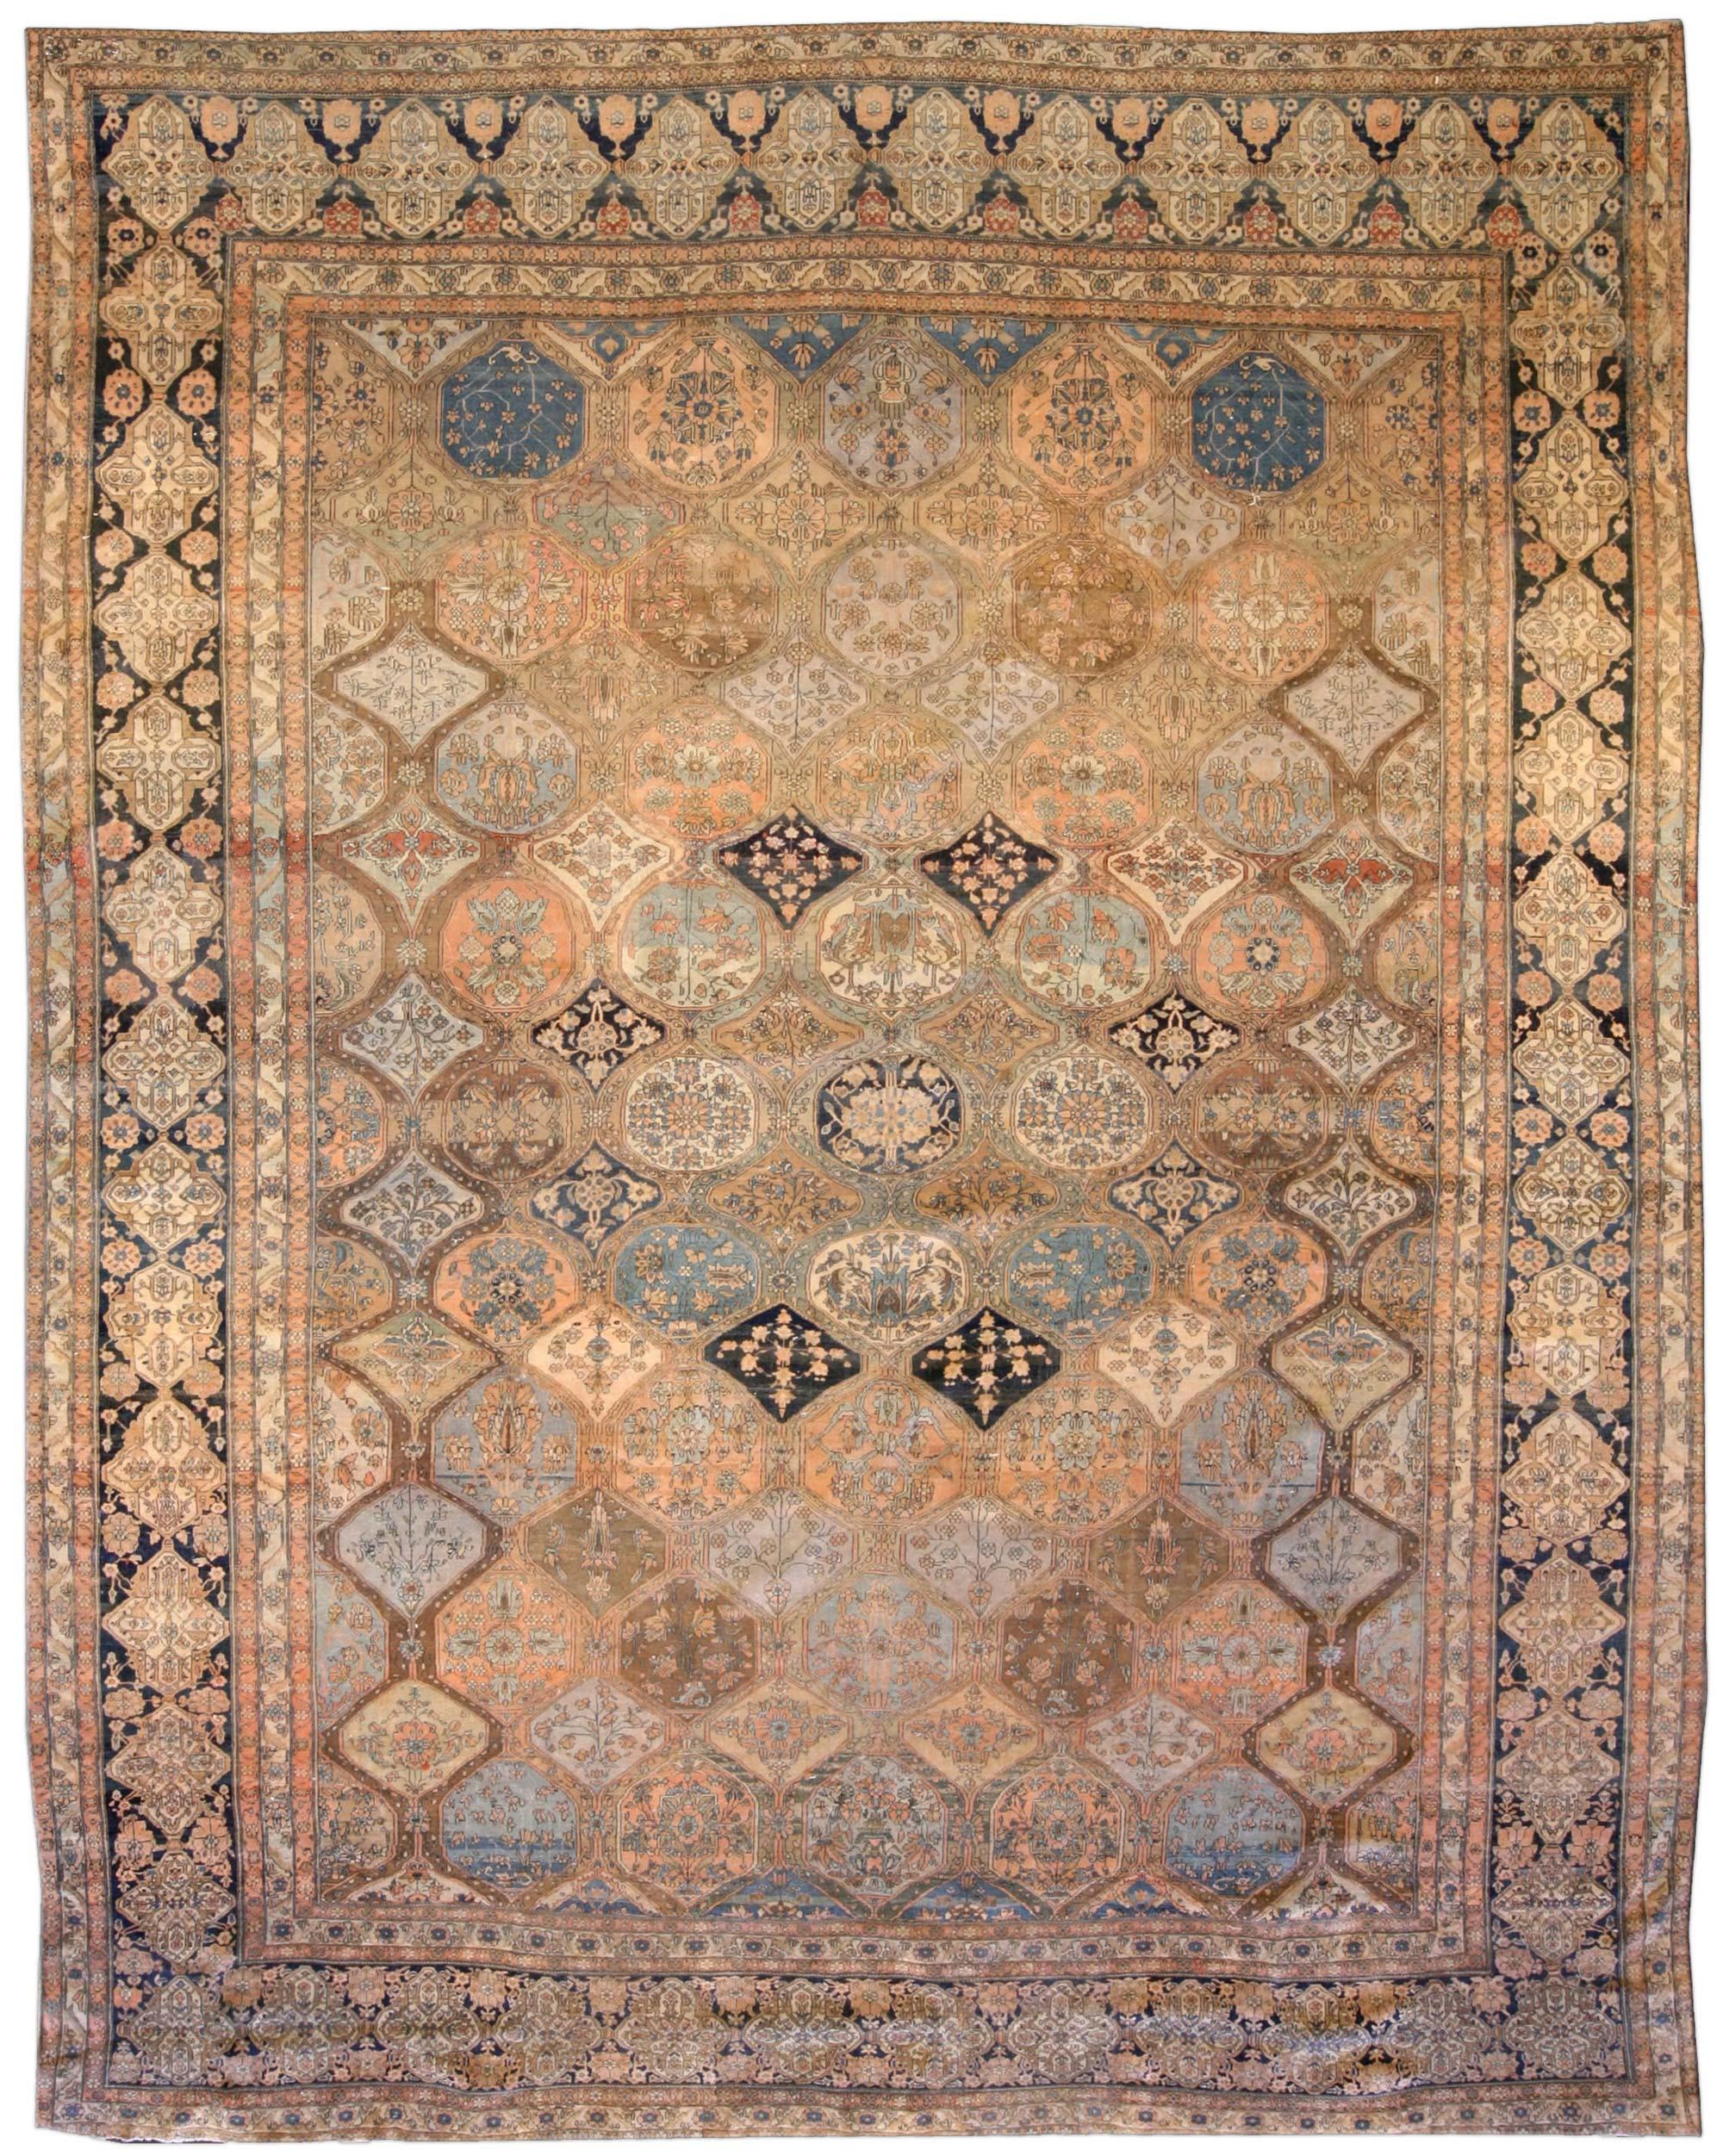 19th Century Persian Kashan Handmade Wool Rug